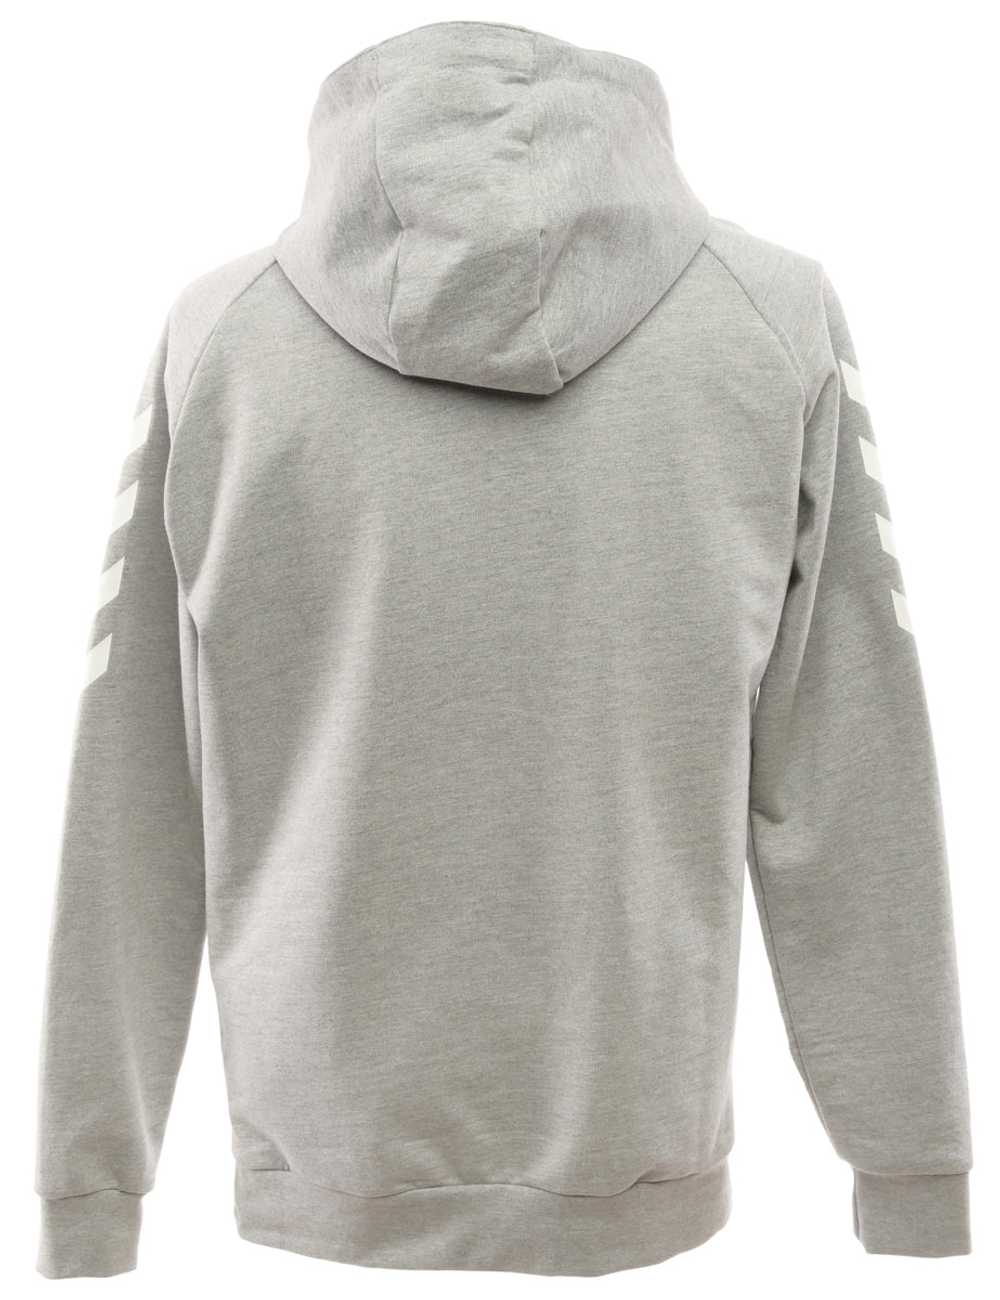 Grey Plain Sweatshirt - M - image 2